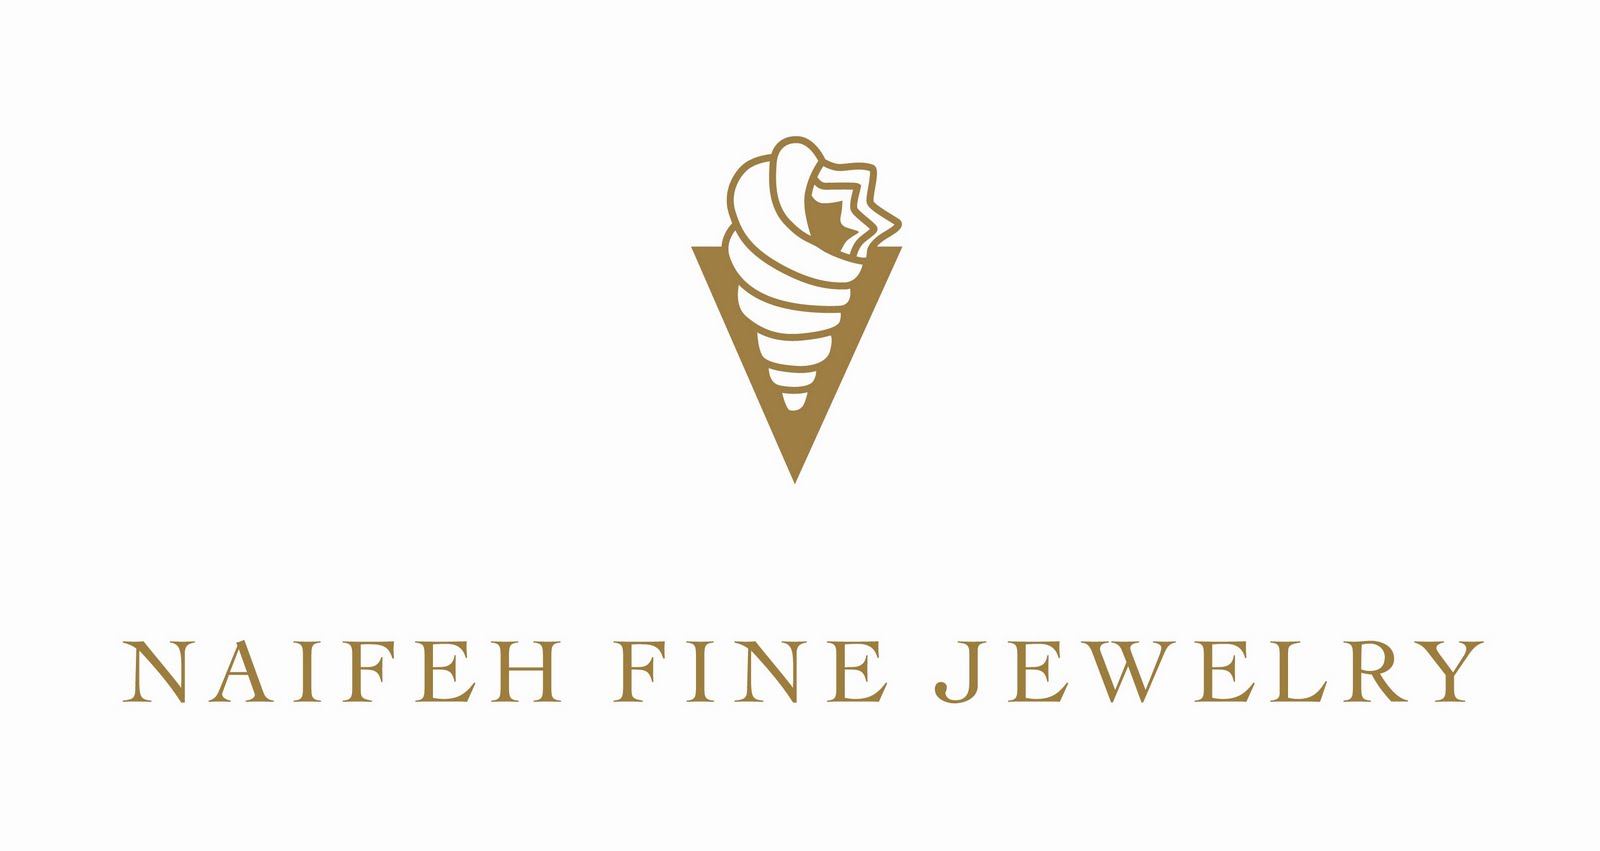 Naifeh Fine Jewelry